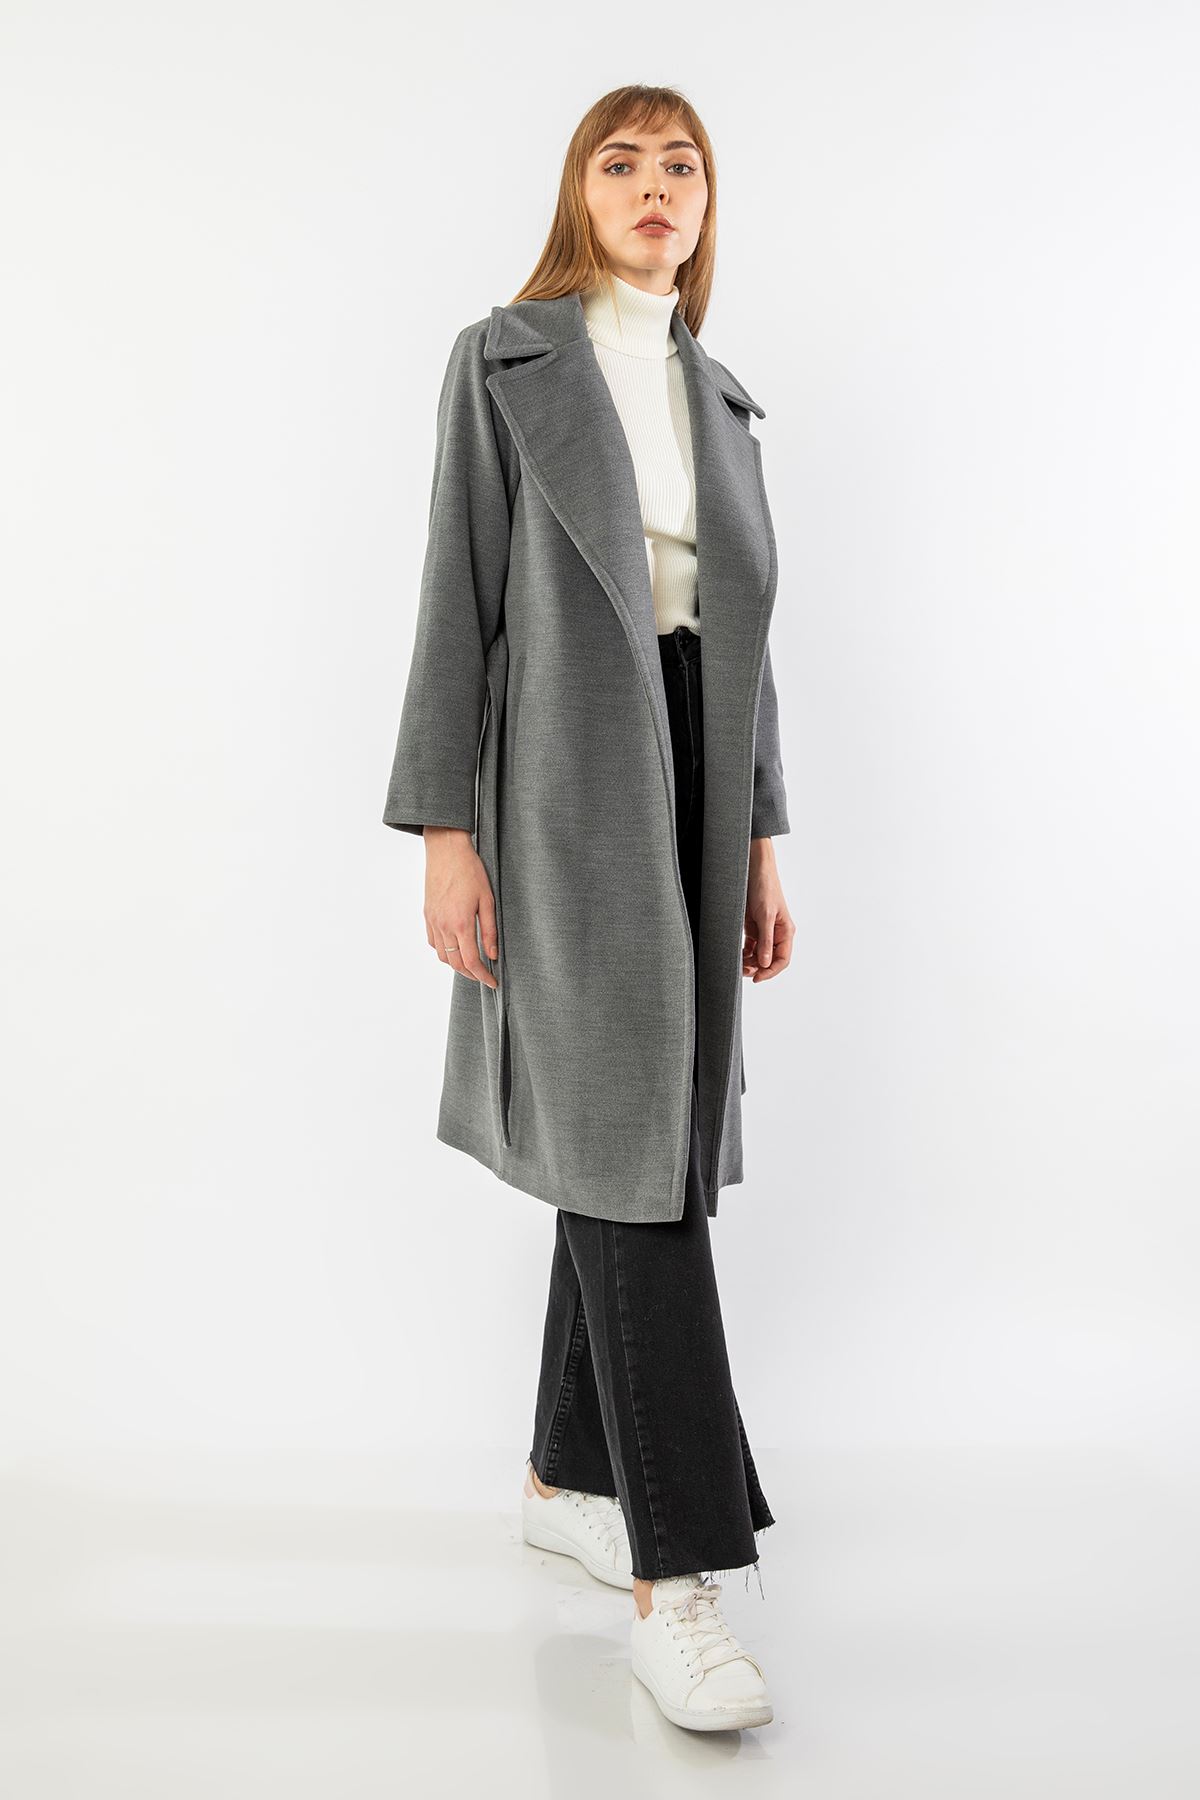 Long Sleeve Revere Collar Long Belted Women'S Coat - Anthracite 